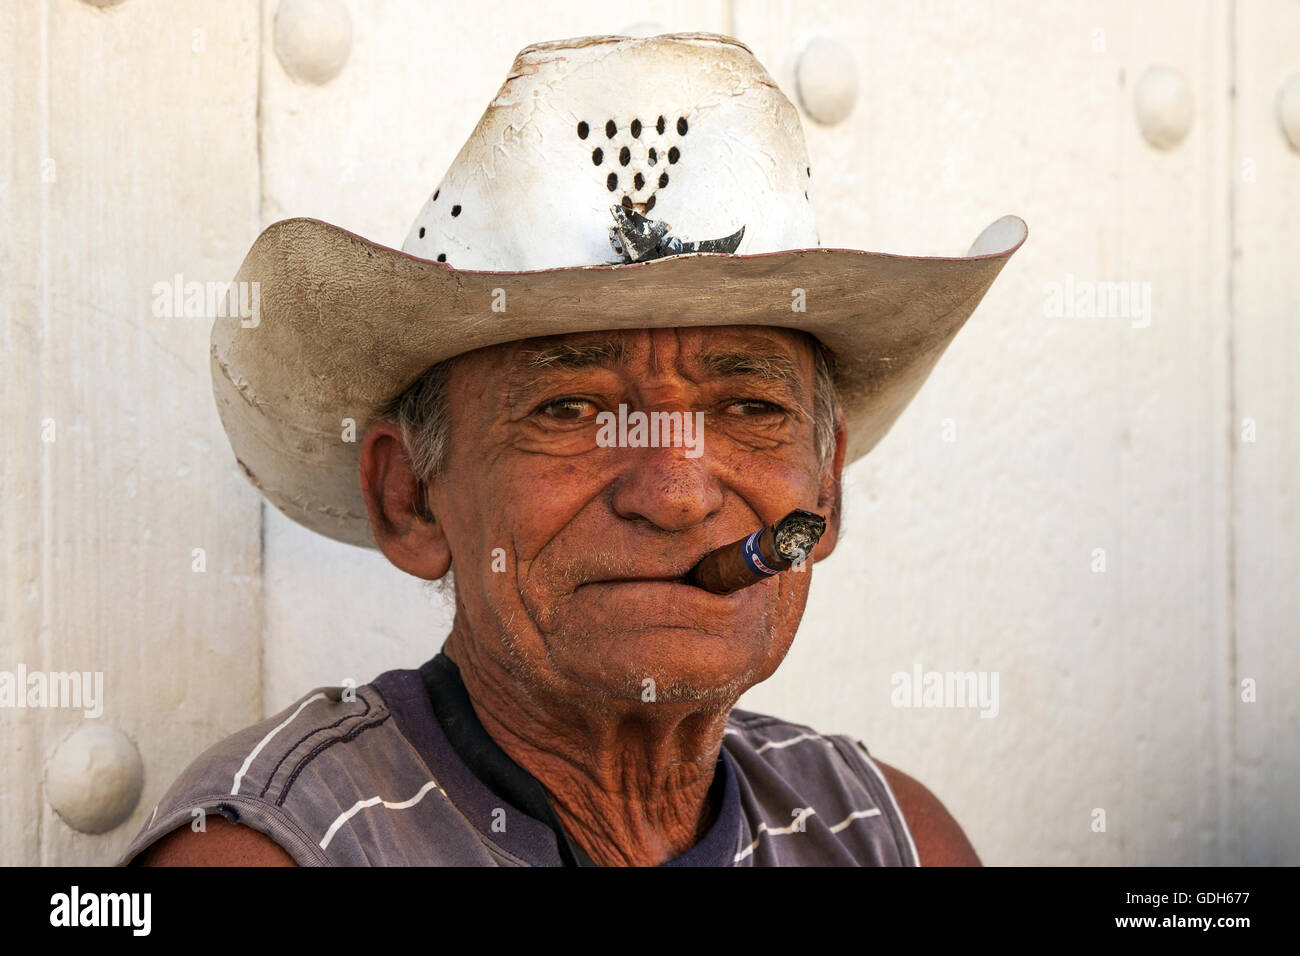 Old cuban man wearing straw hat, smoking cigar, Trinidad, Cuba Stock Photo